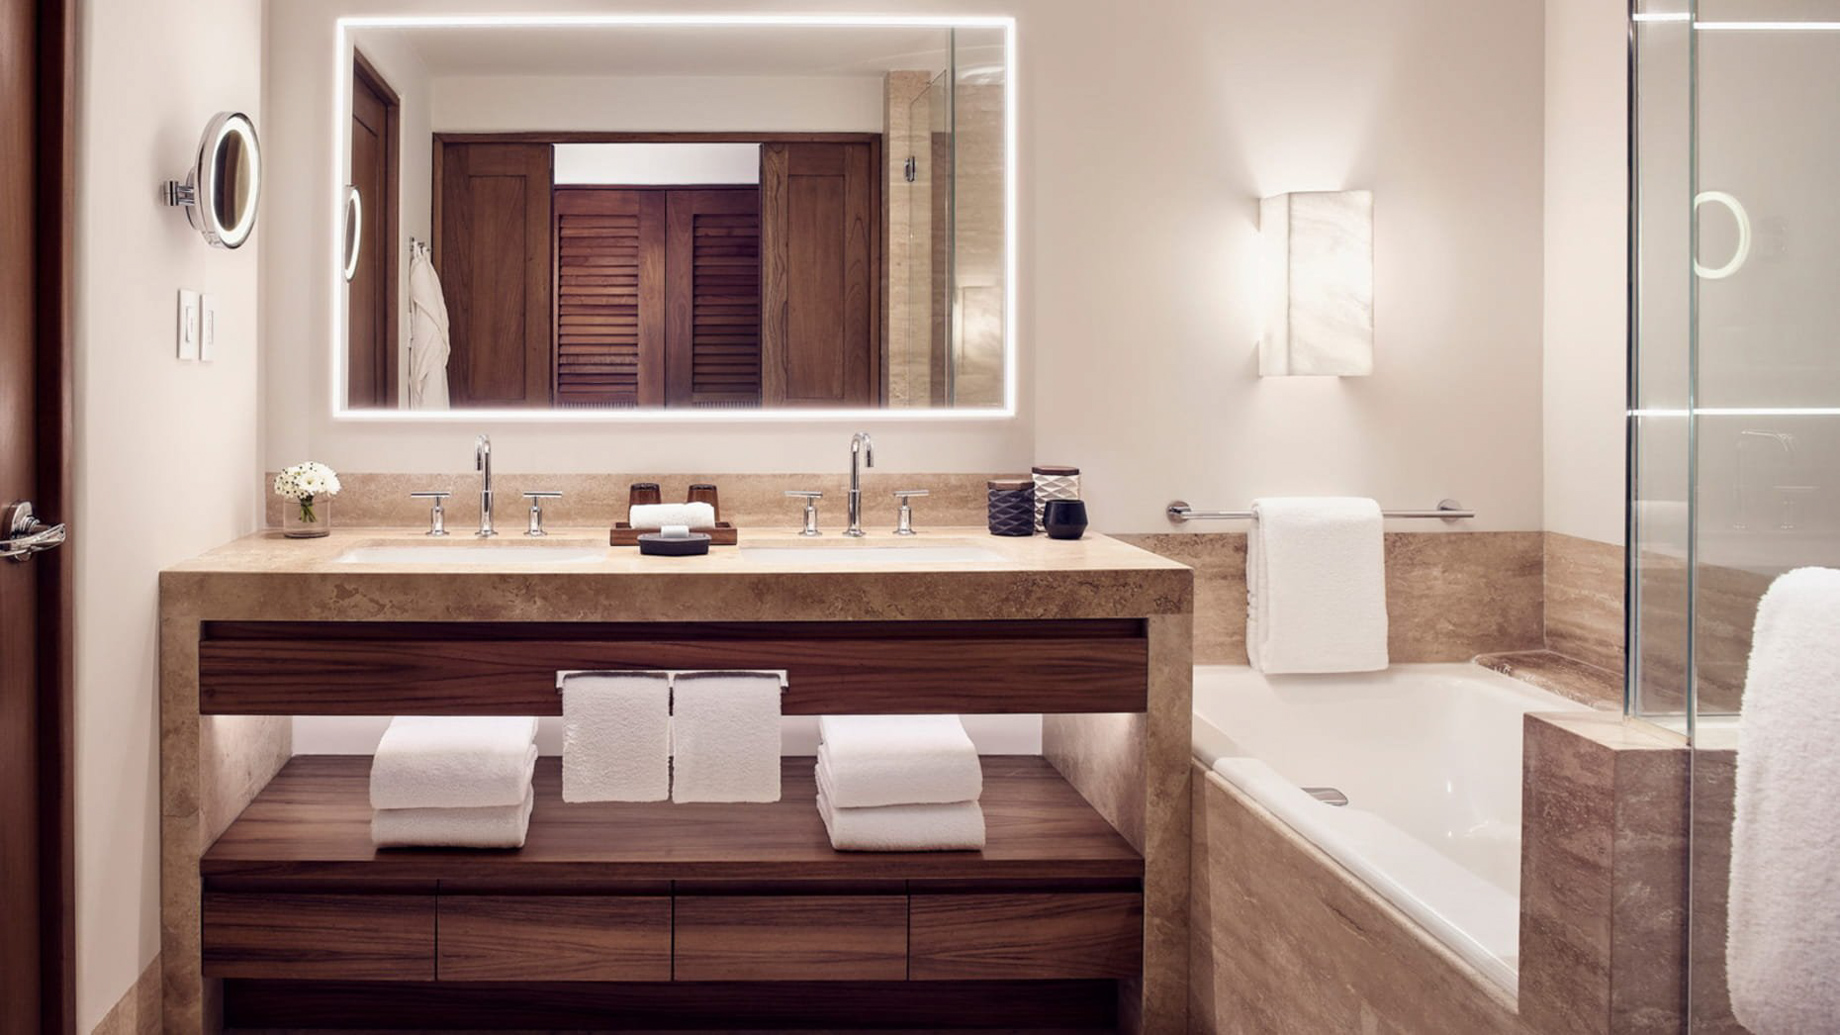 Four Seasons Resort Punta Mita – Nayarit, Mexico – Oceanfront Casita Bathroom